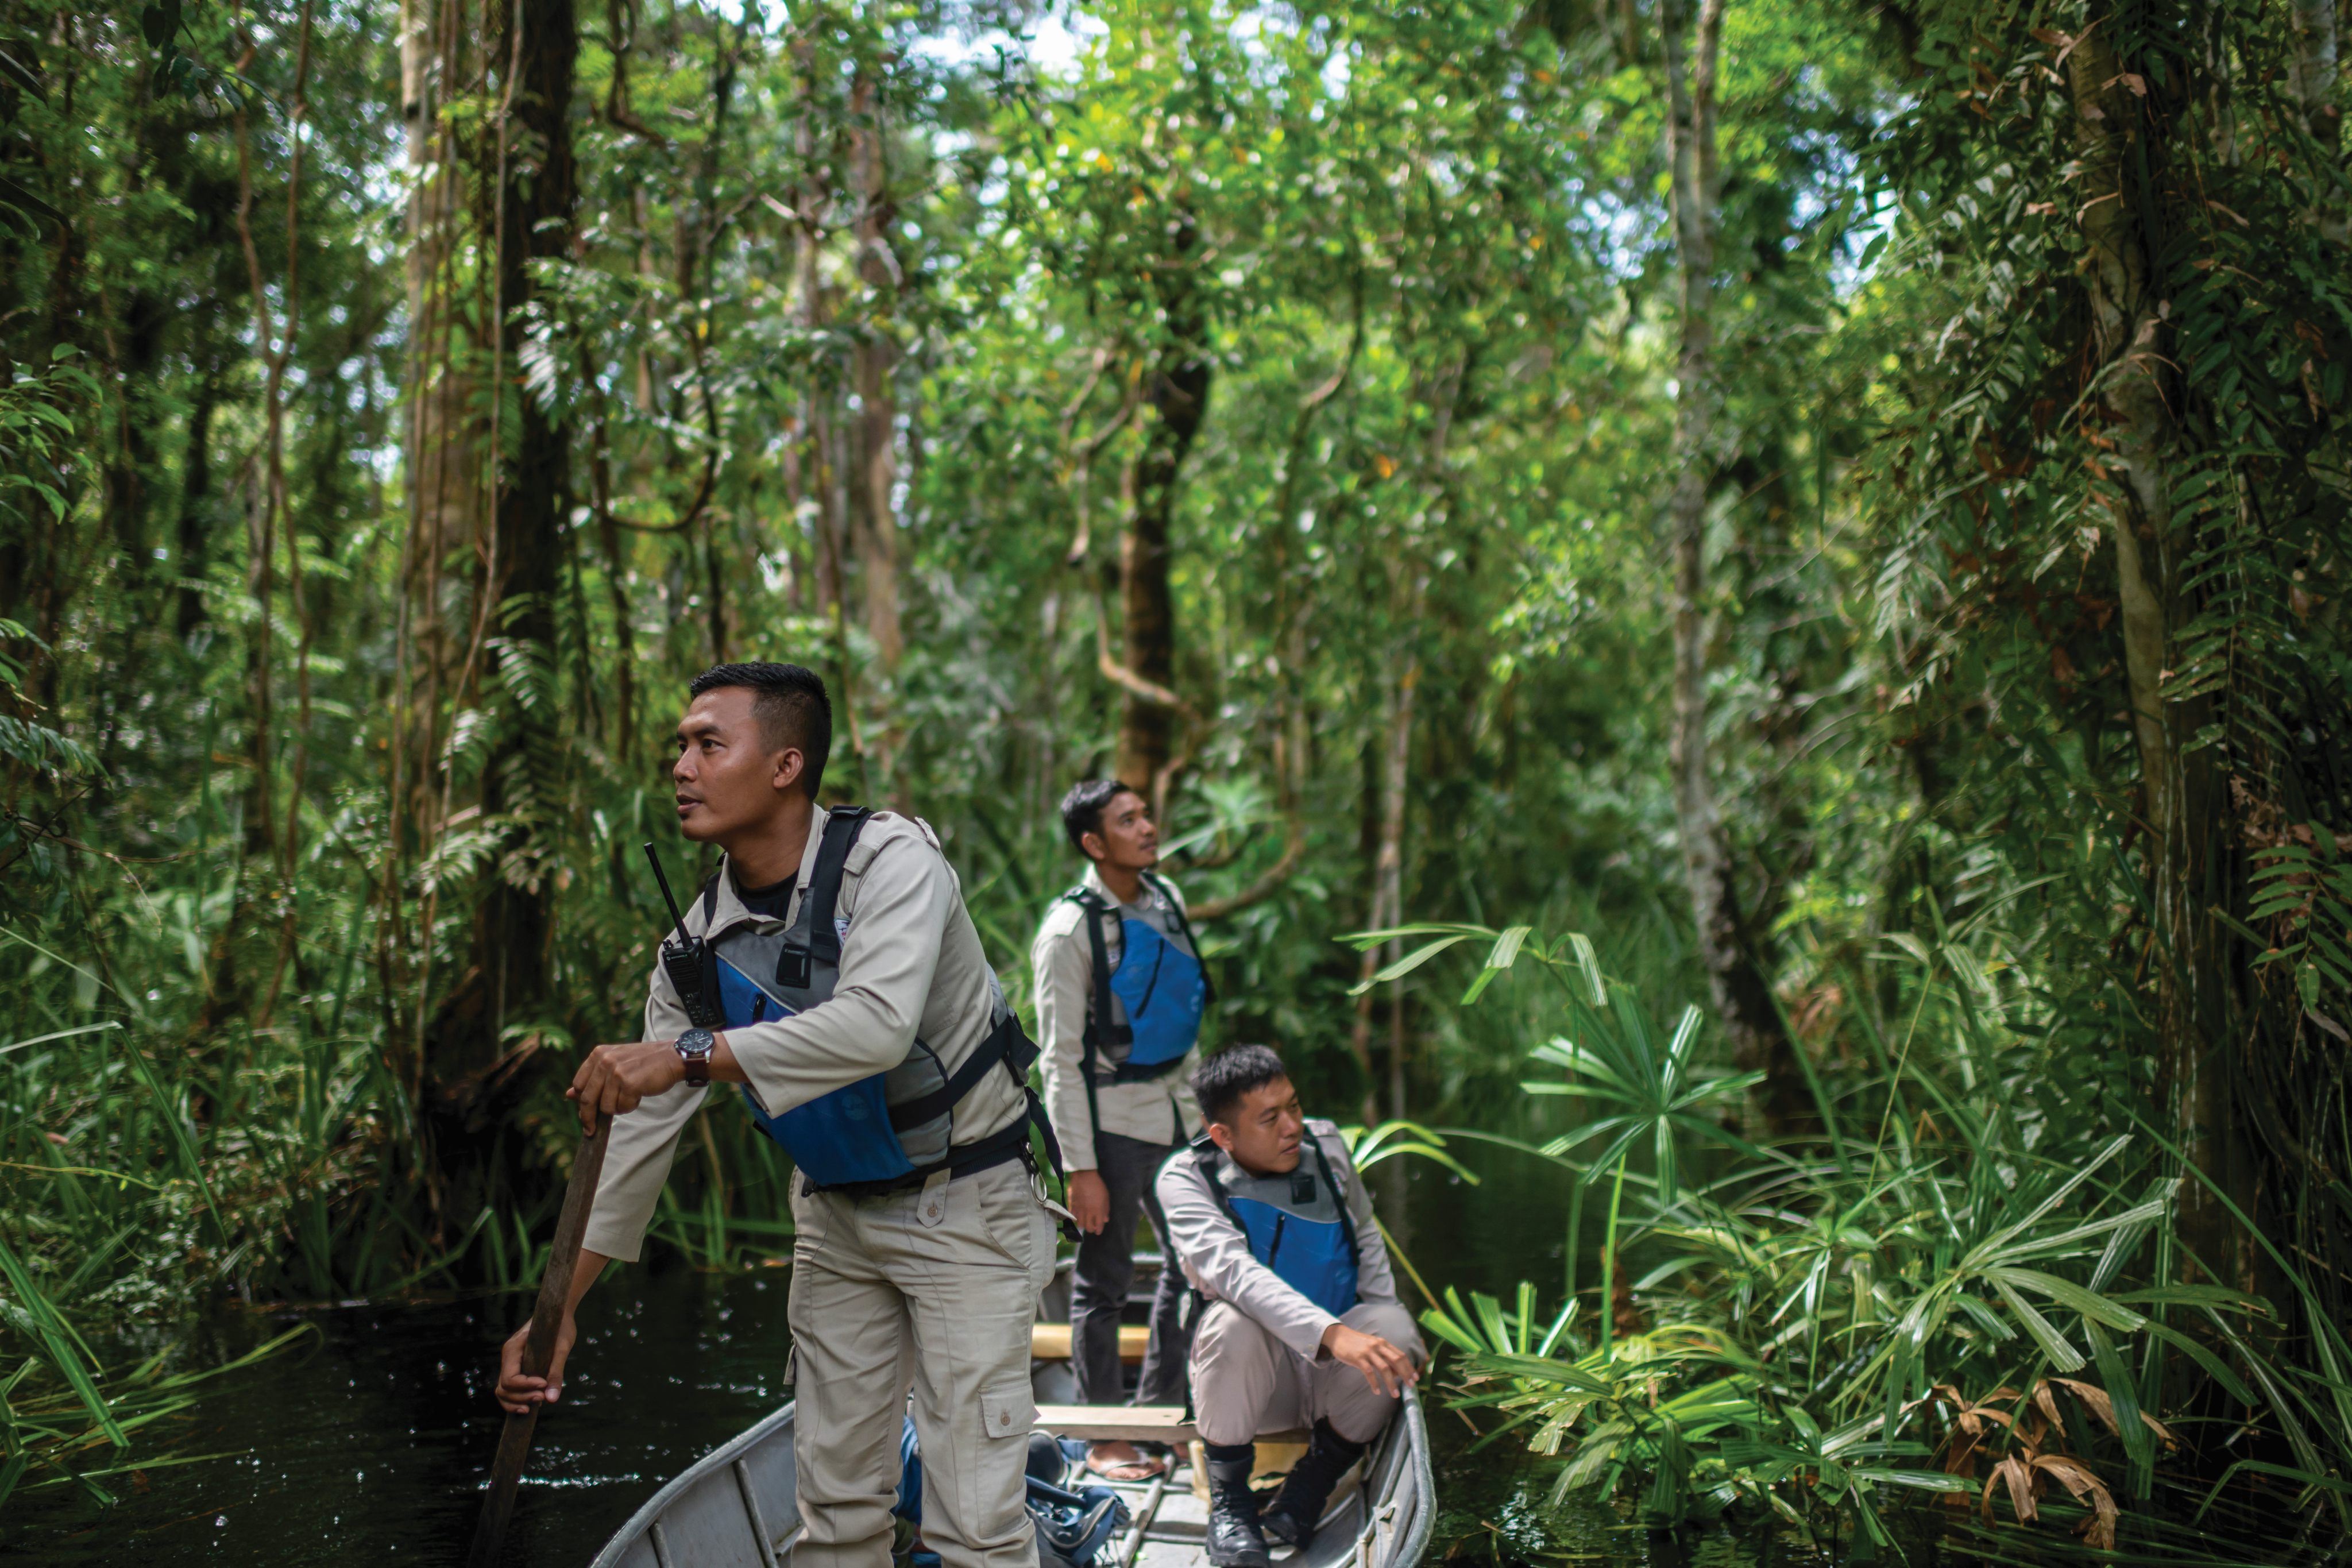 Rangers from the Restorasi Ekosistem Riau ecosystem restoration programme patrol the Serkap river in Sumatra, Indonesia.